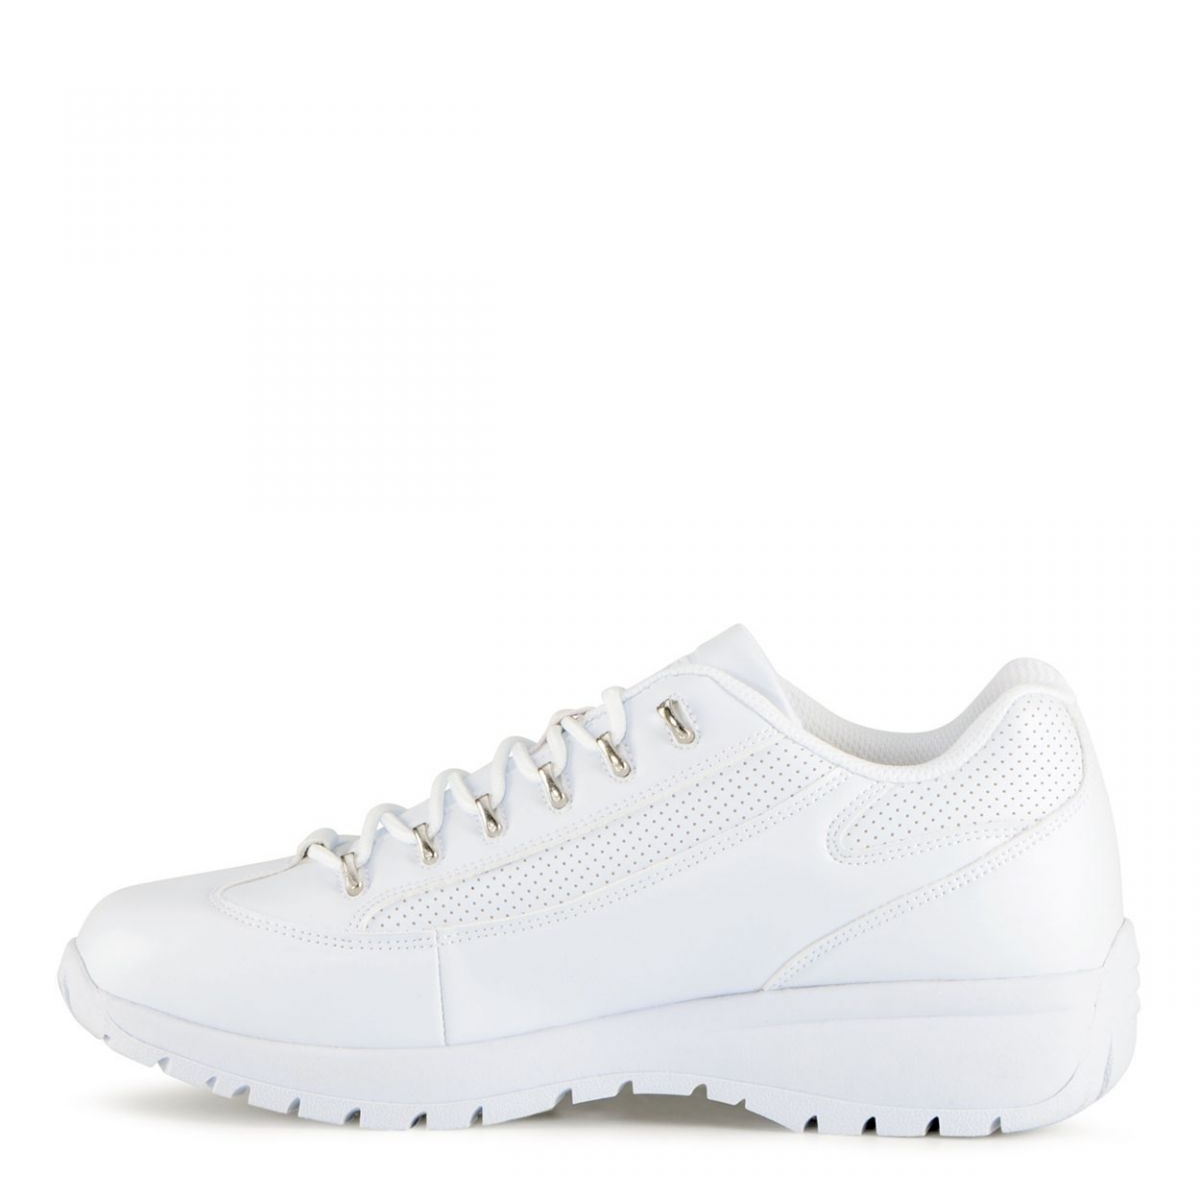 Lugz Men's Express Sneaker White - MEXPRSPV-100 WHITE - WHITE, 11.5